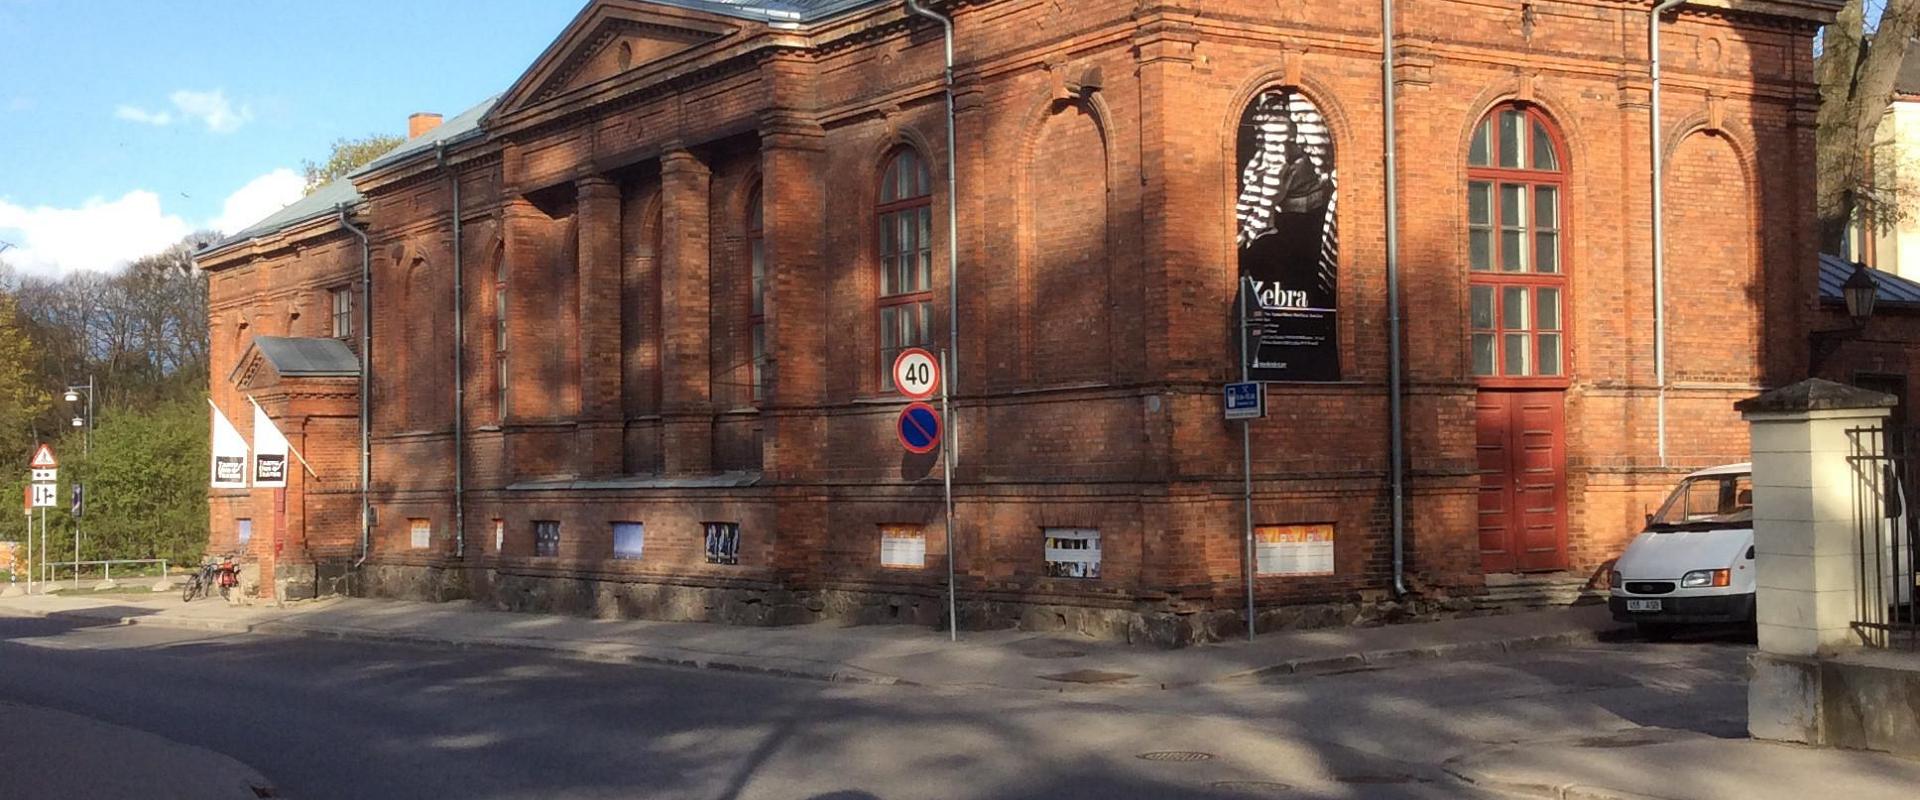 Tartu New Theatre on the corner of Lai and Magasini